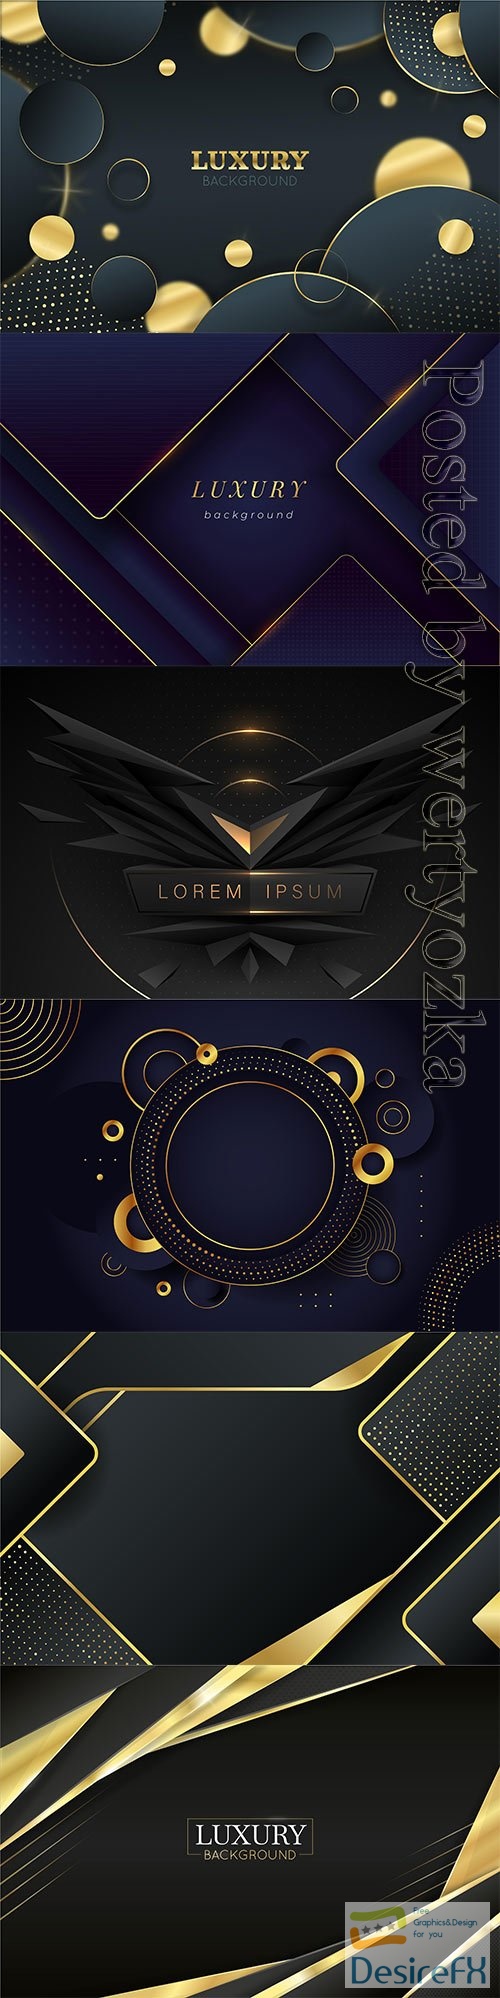 Dark gold and black luxury vector background